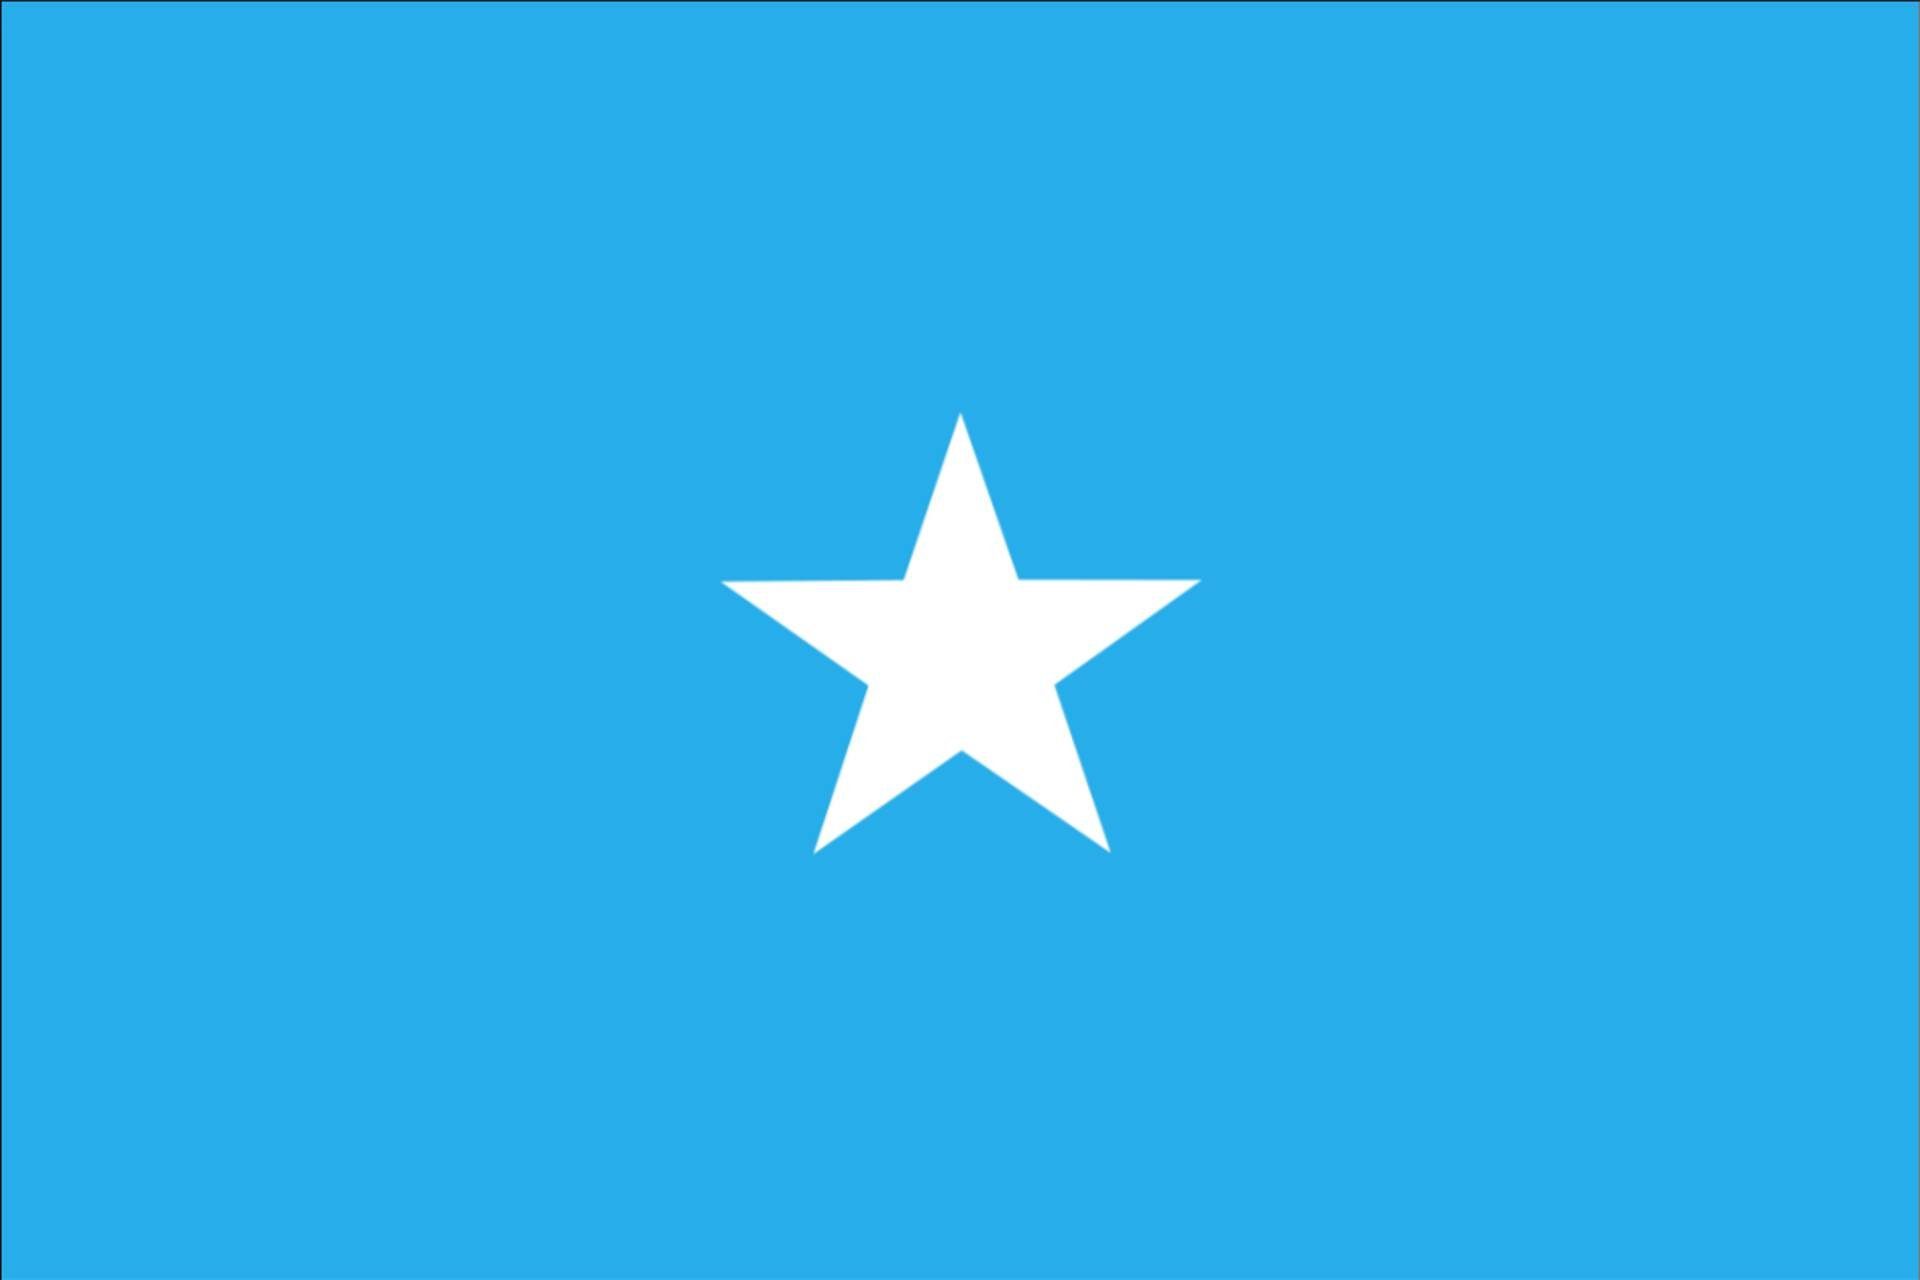 flaggenmeer g/m² Flagge Querformat Flagge 110 Somalia